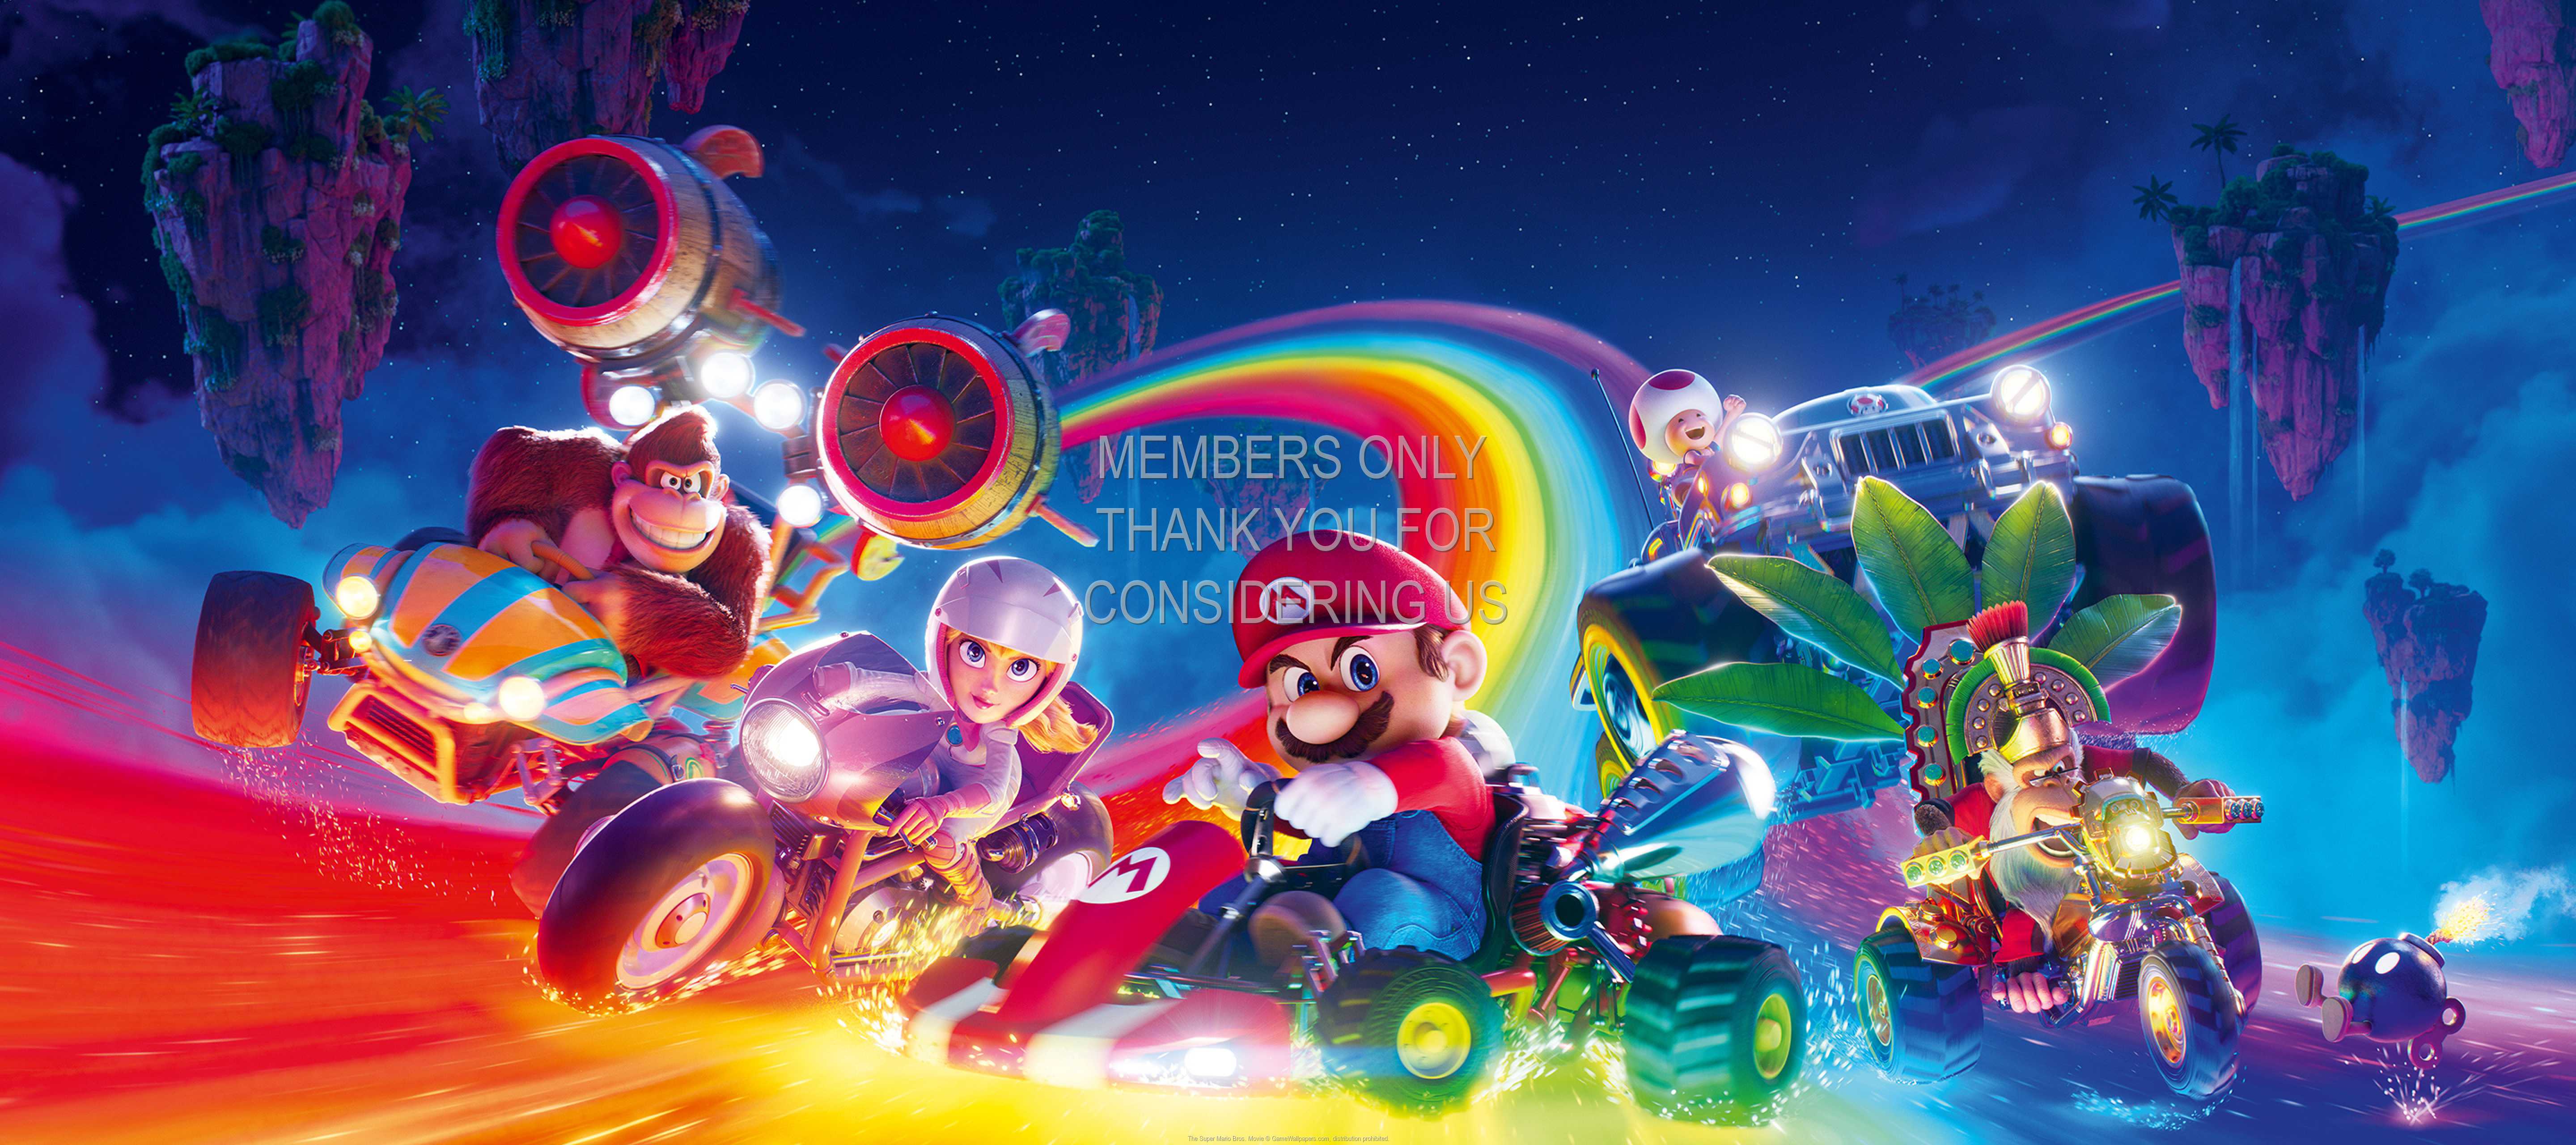 The Super Mario Bros. Movie 1440p%20Horizontal Mobile wallpaper or background 02